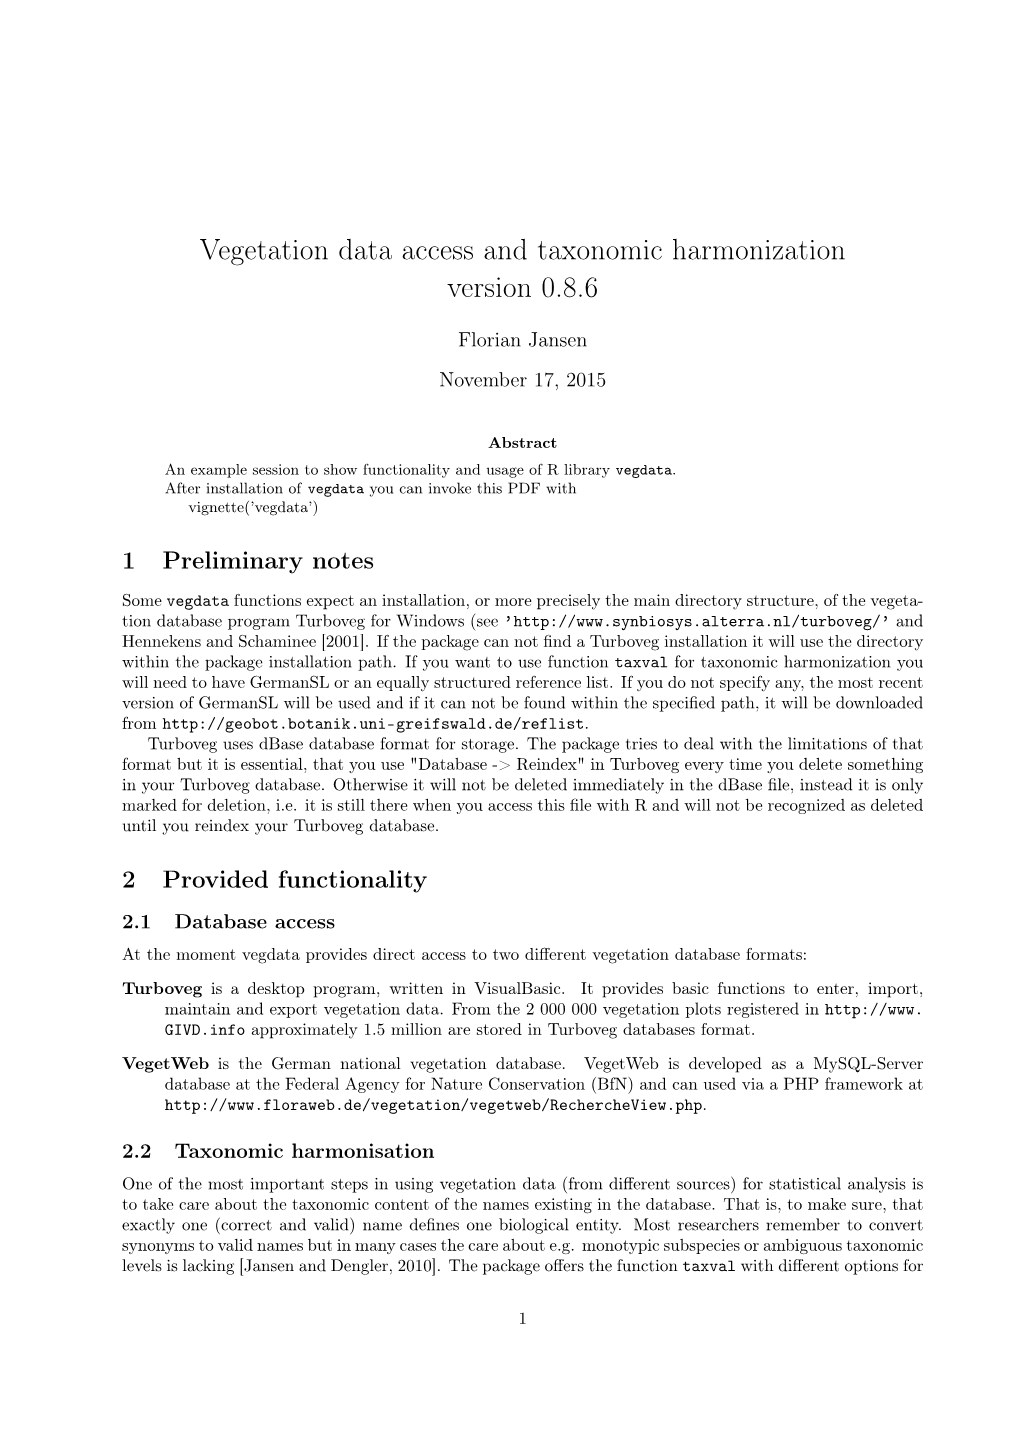 Vegetation Data Access and Taxonomic Harmonization Version 0.8.6